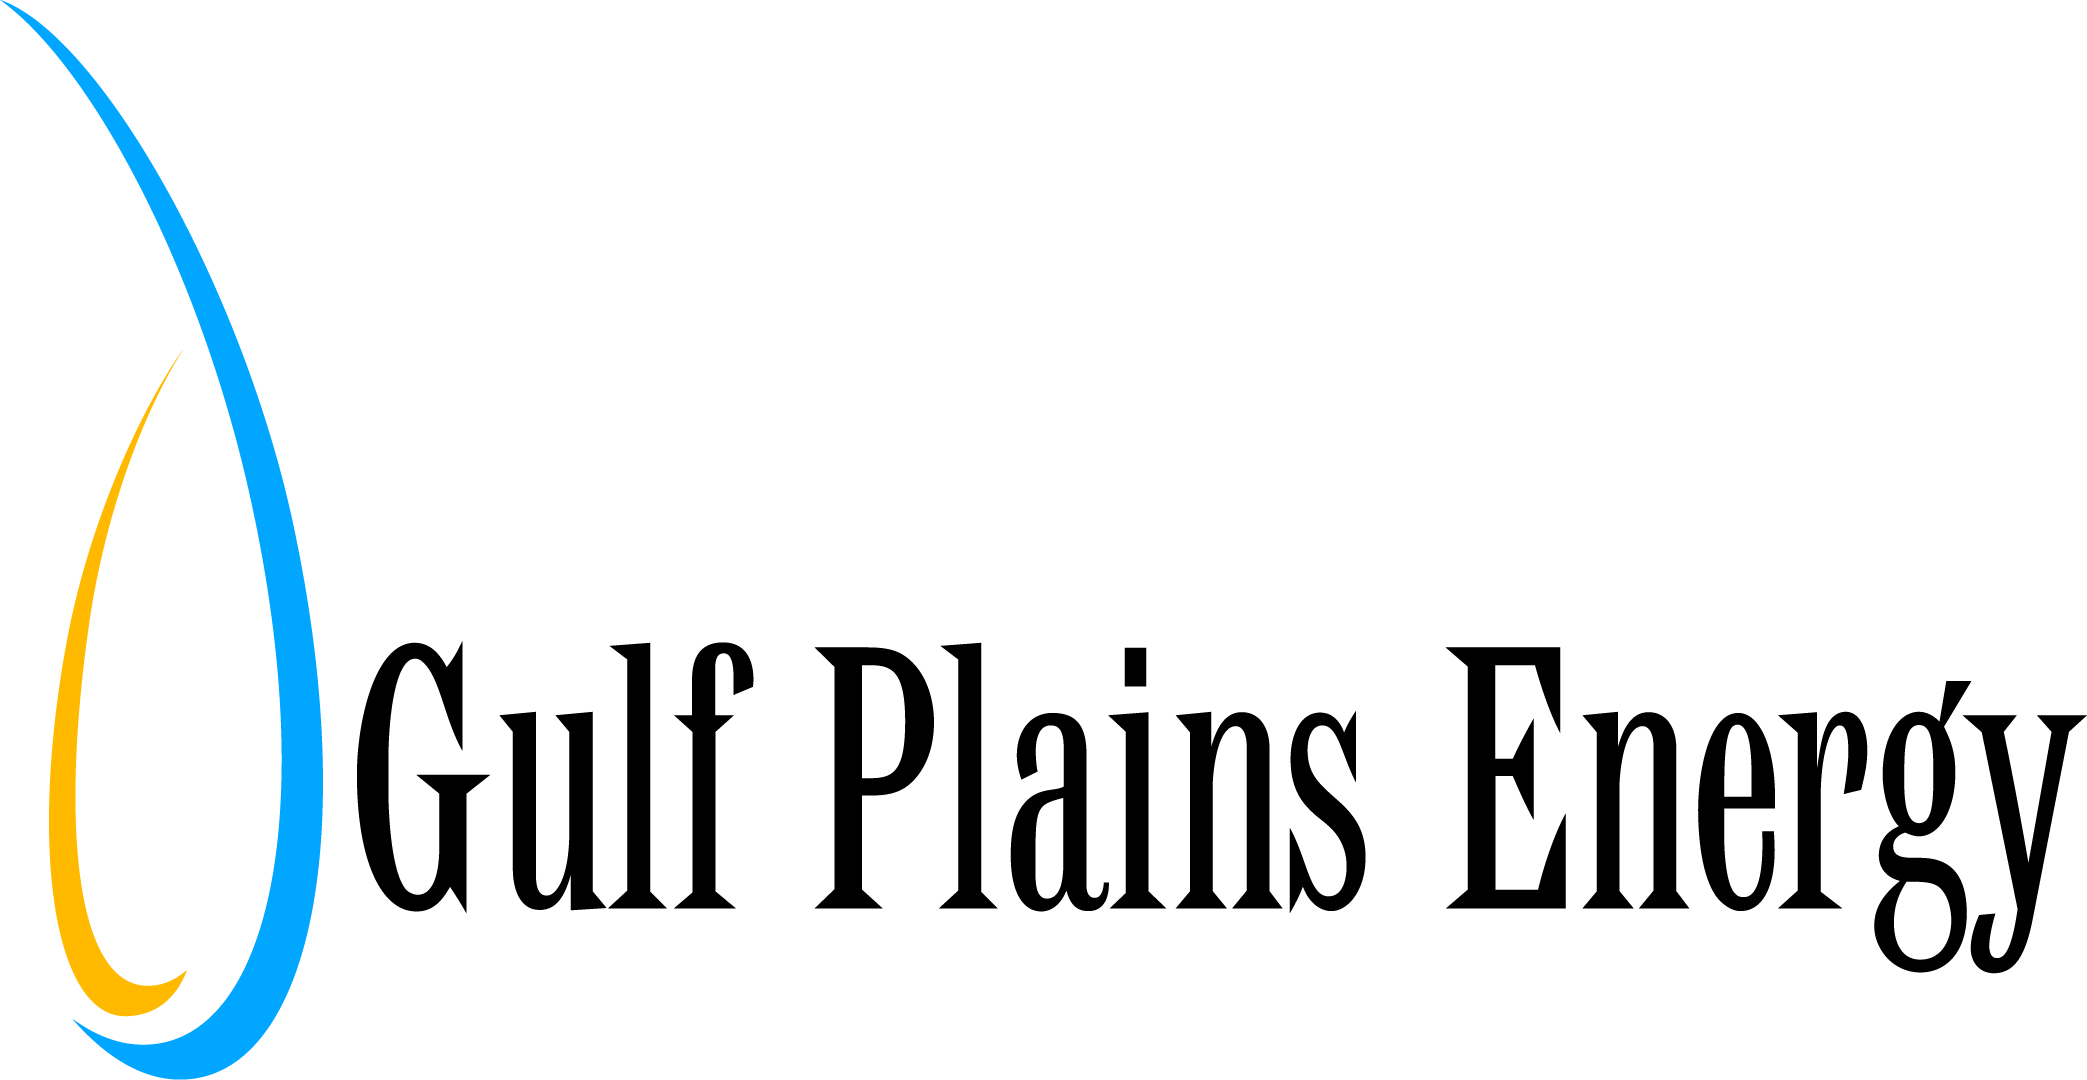 Gulf Plains Energy